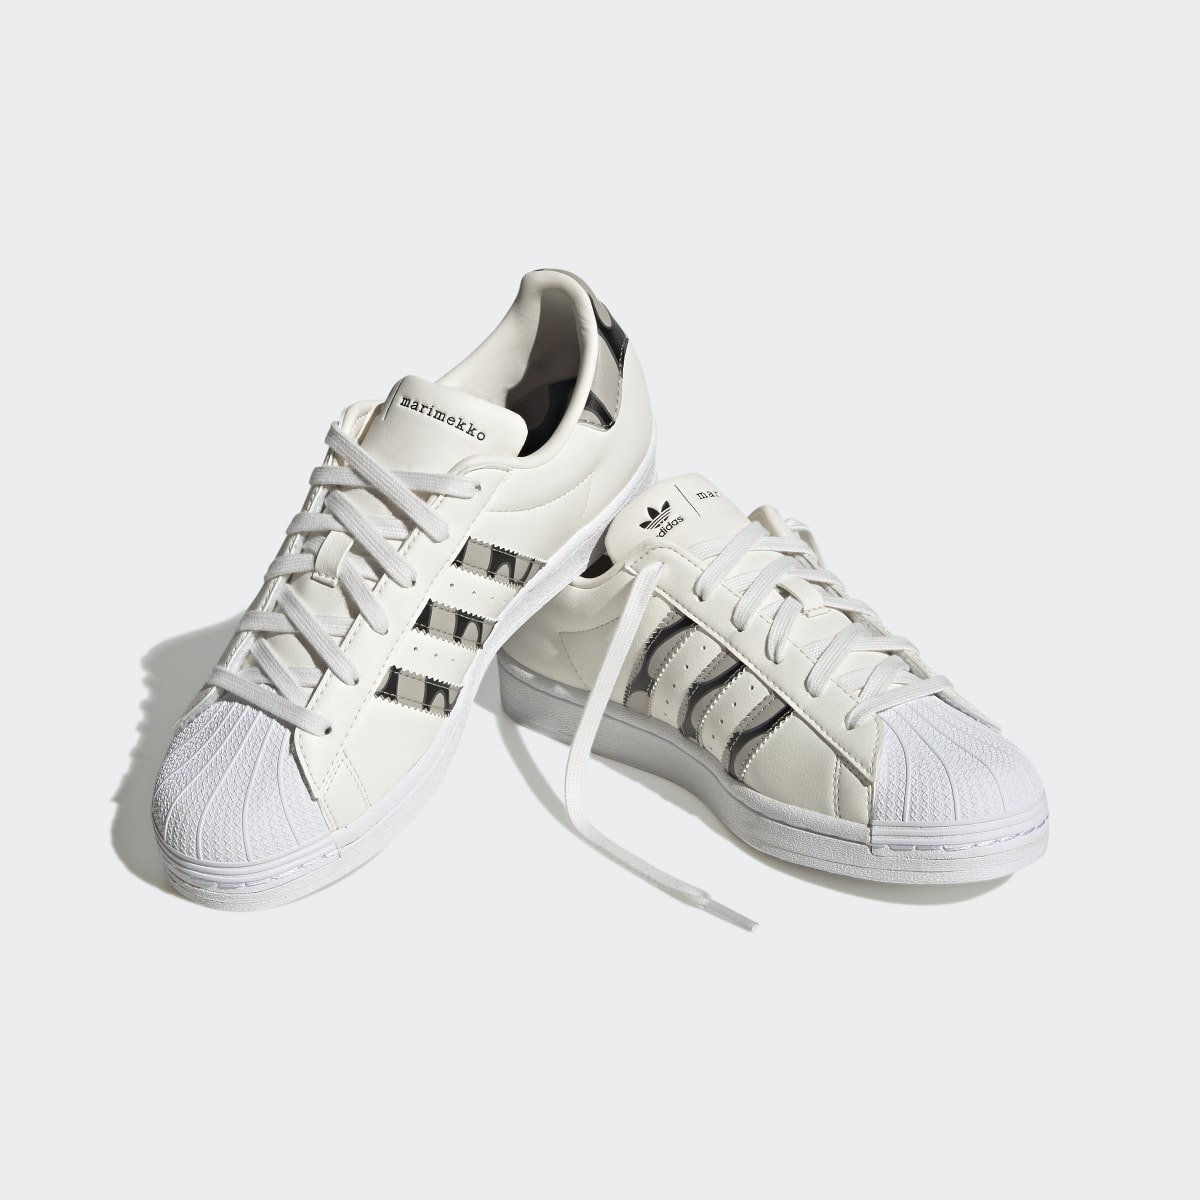 Adidas x Marimekko Superstar Schuh. 6